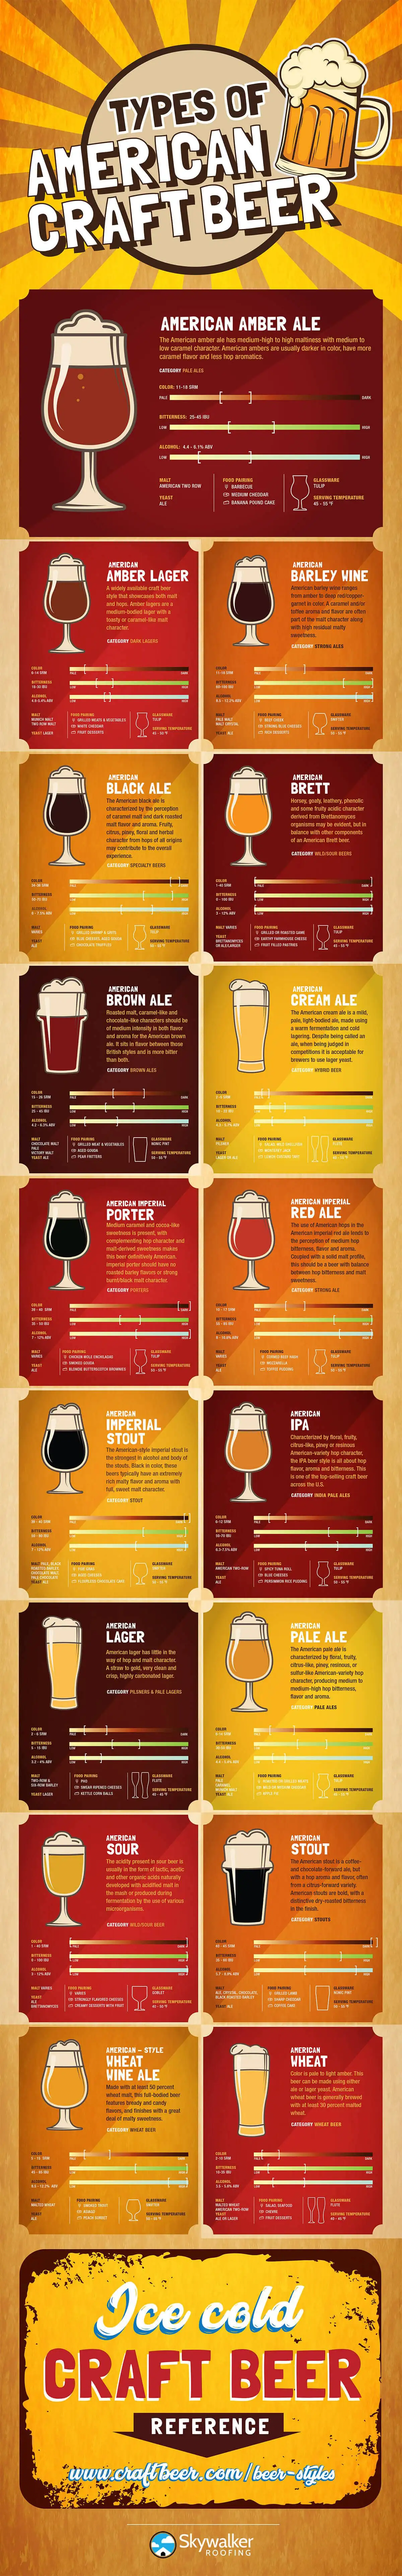 Types of american craft beer